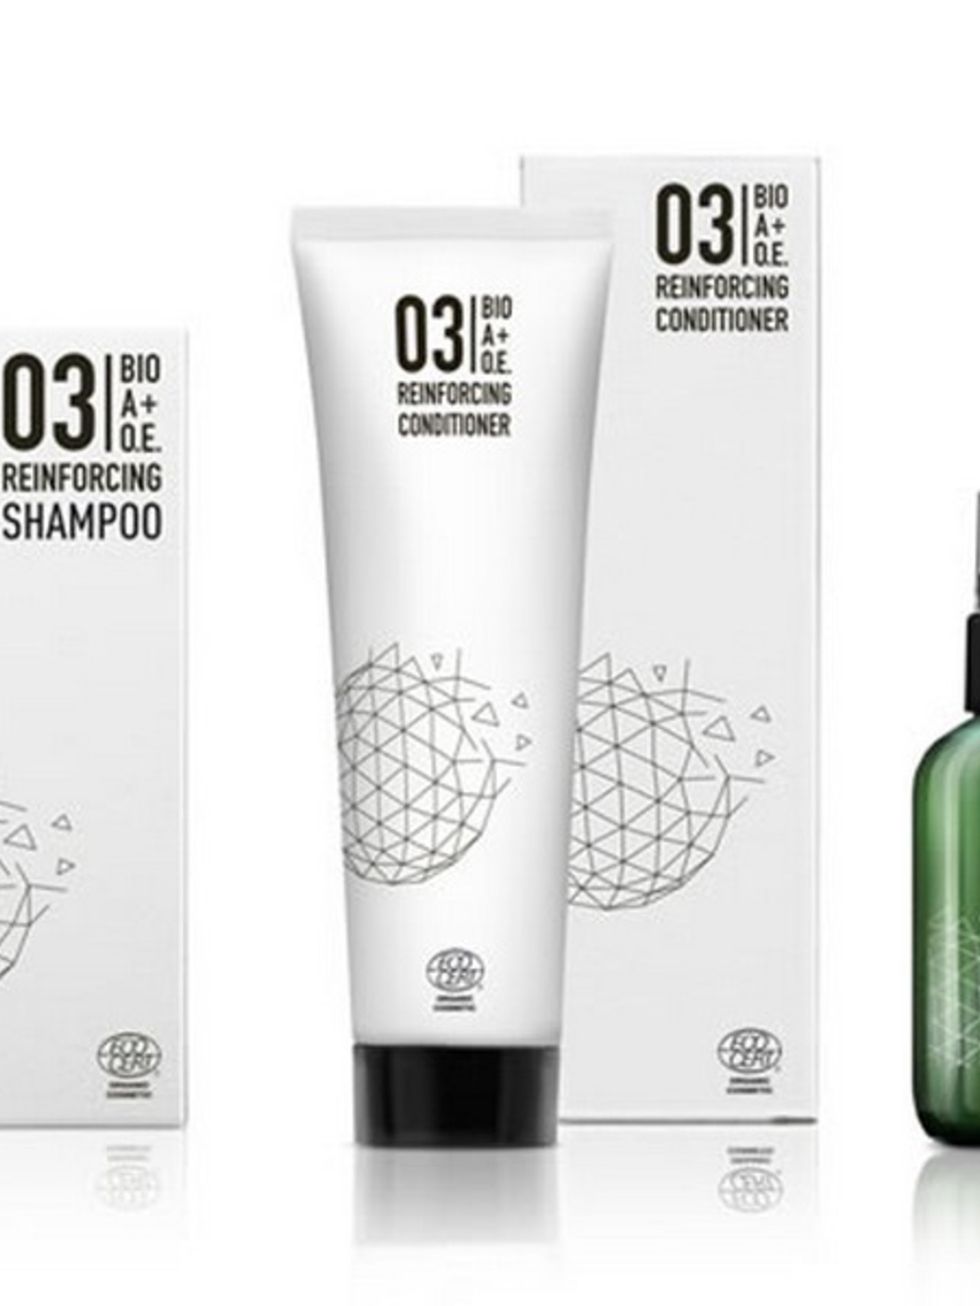 Liquid, Fluid, Product, Green, White, Bottle, Style, Beauty, Font, Cosmetics, 